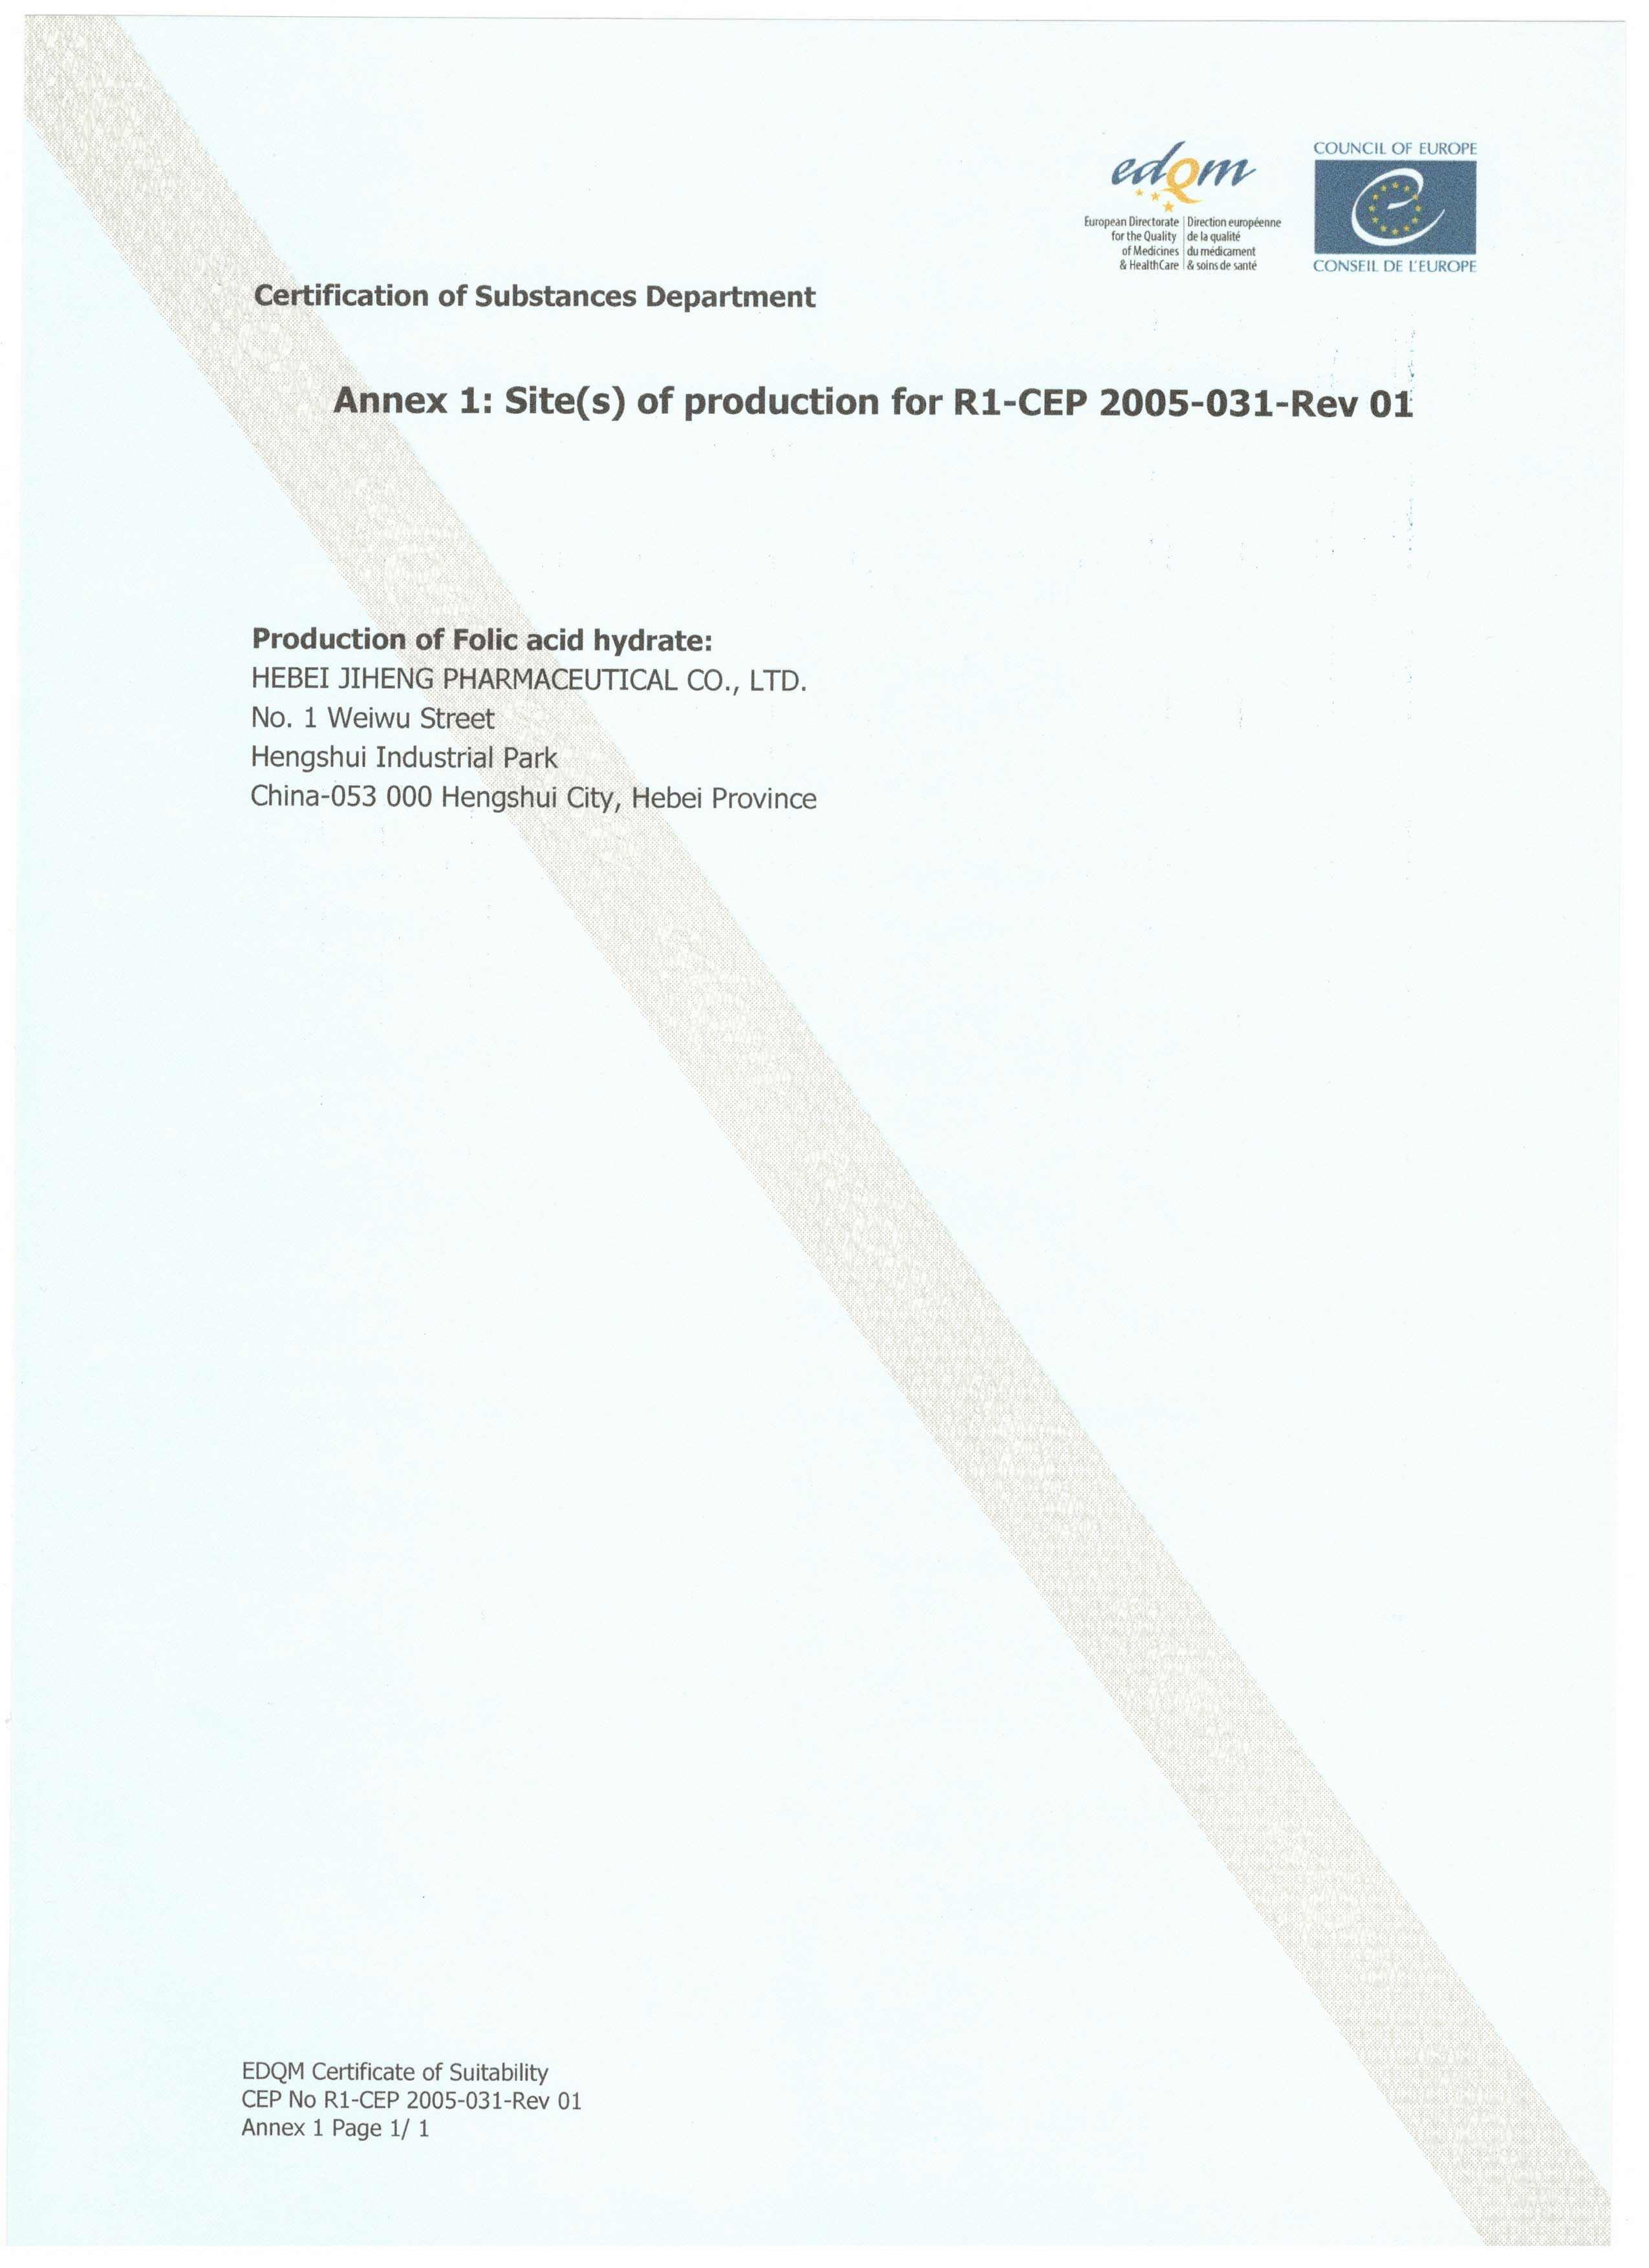 葉酸CEP證書